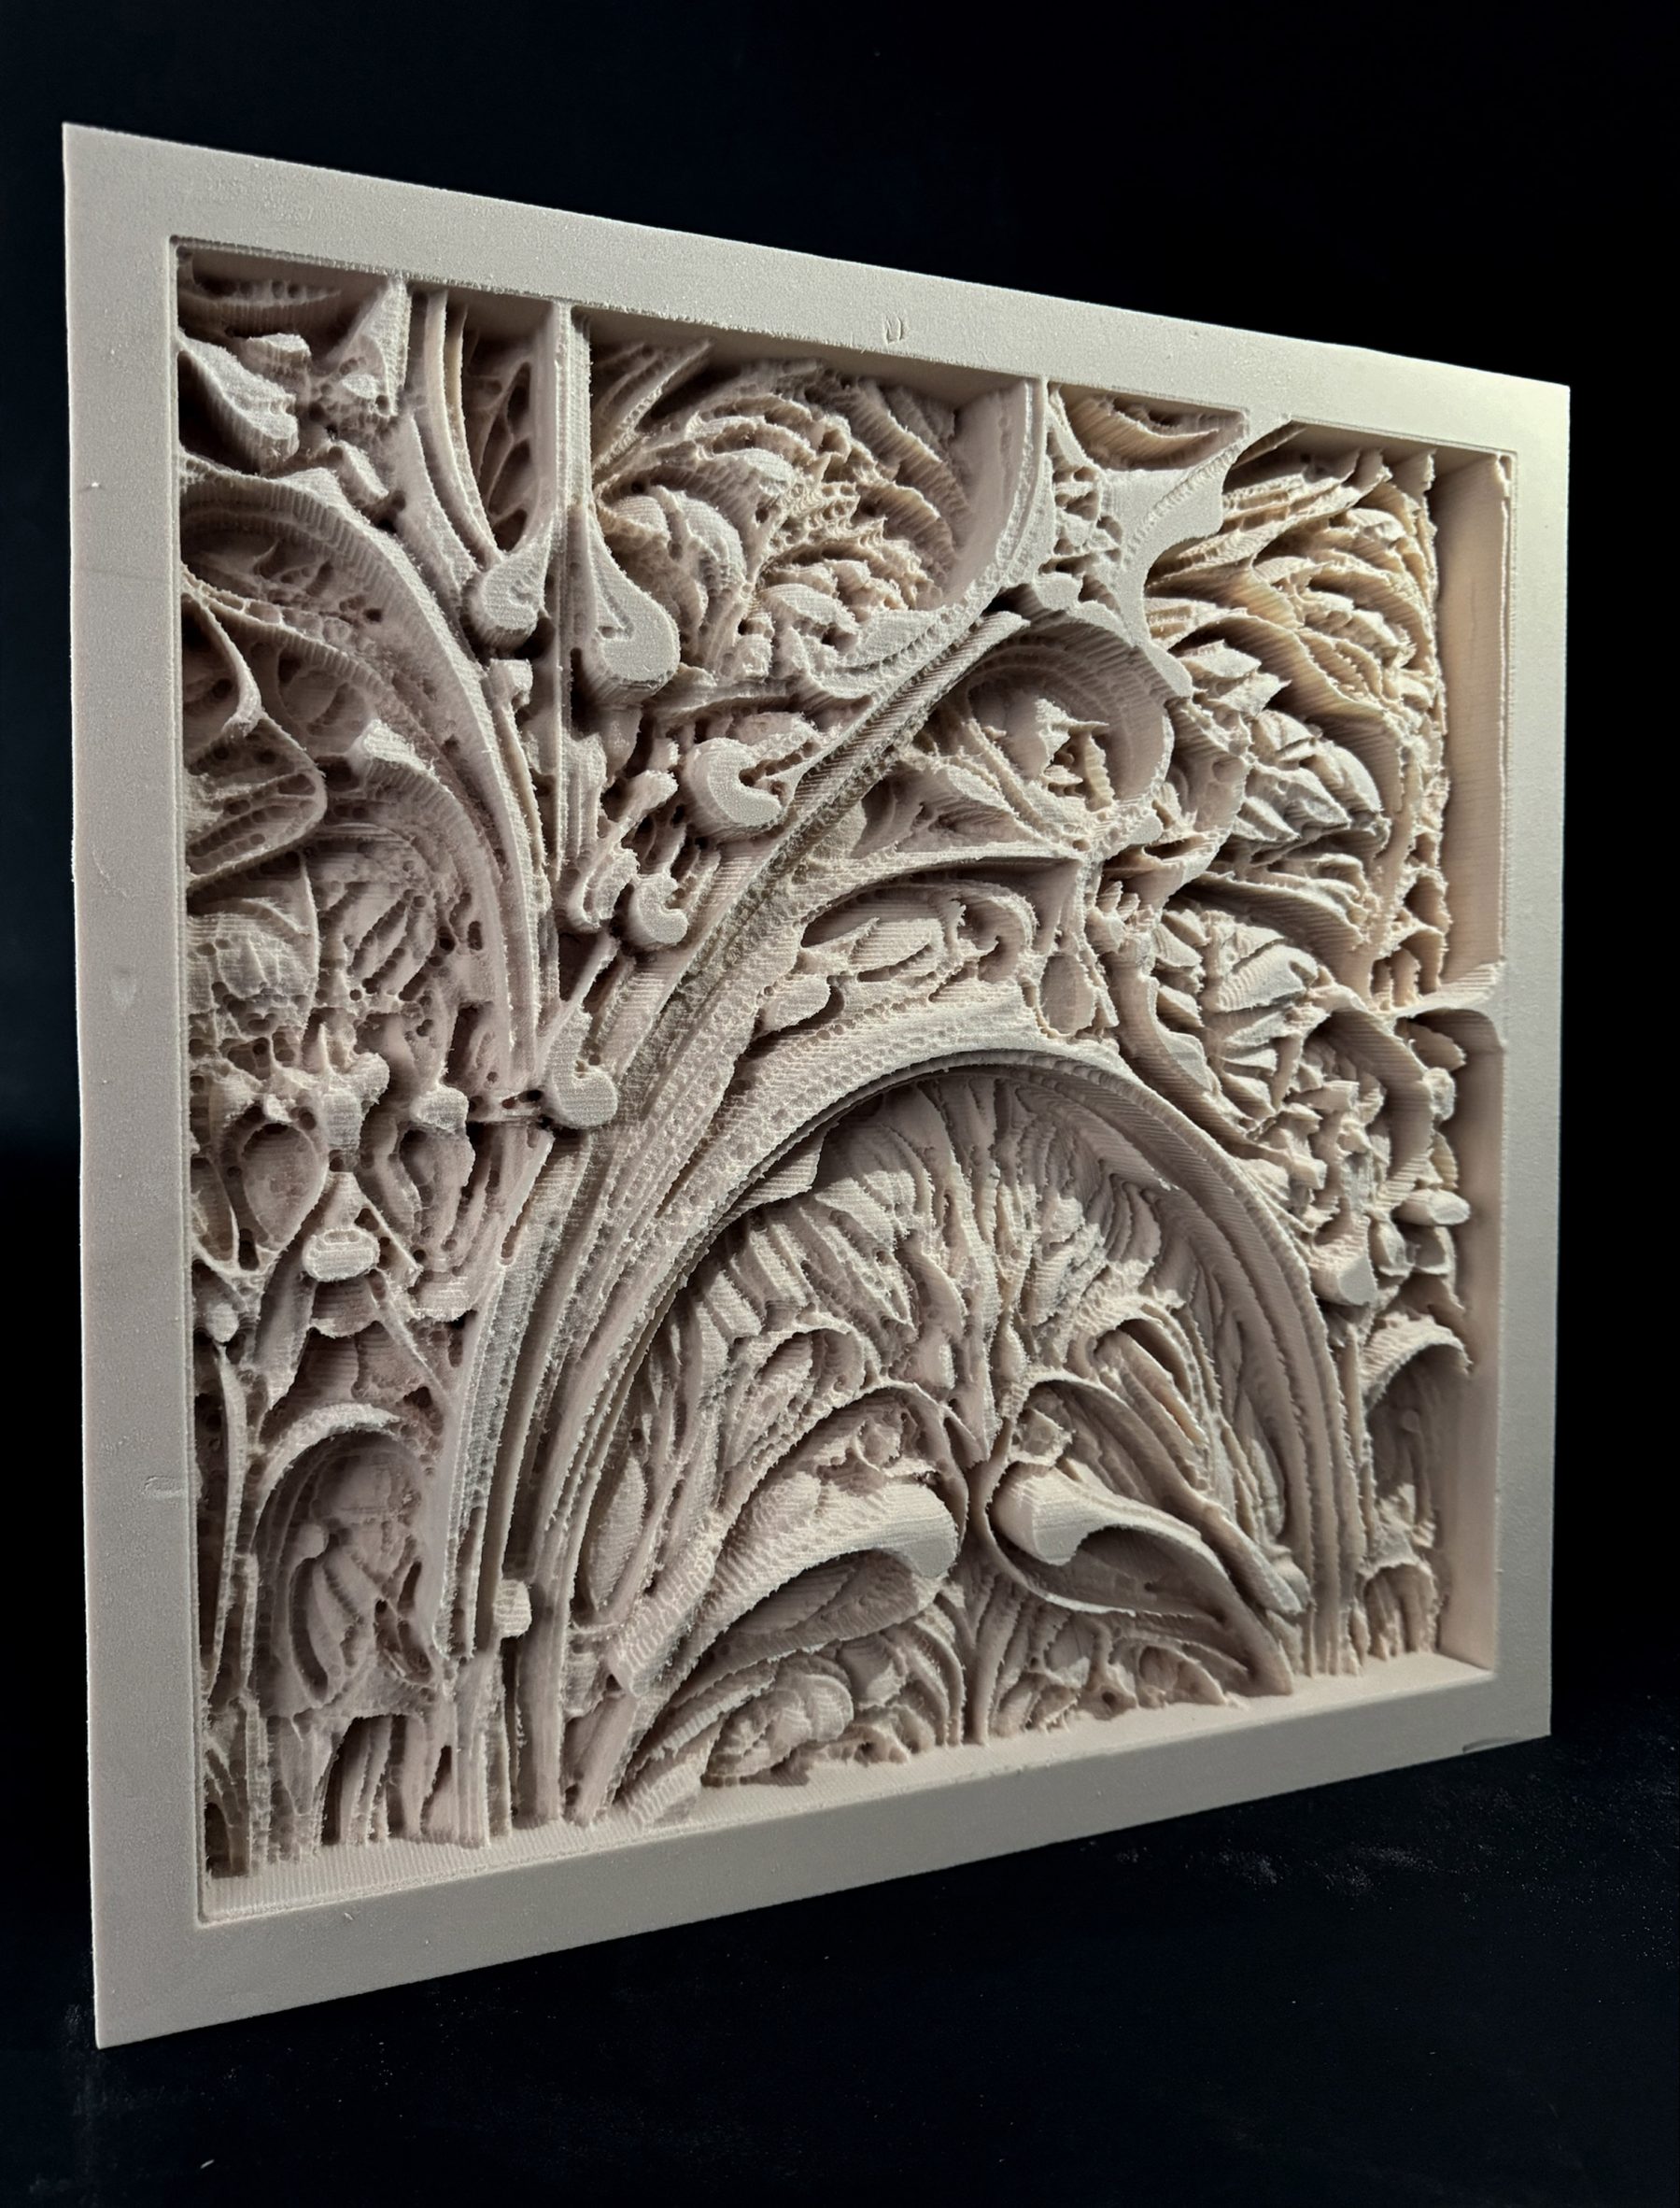 An ornate 3D-printed panel